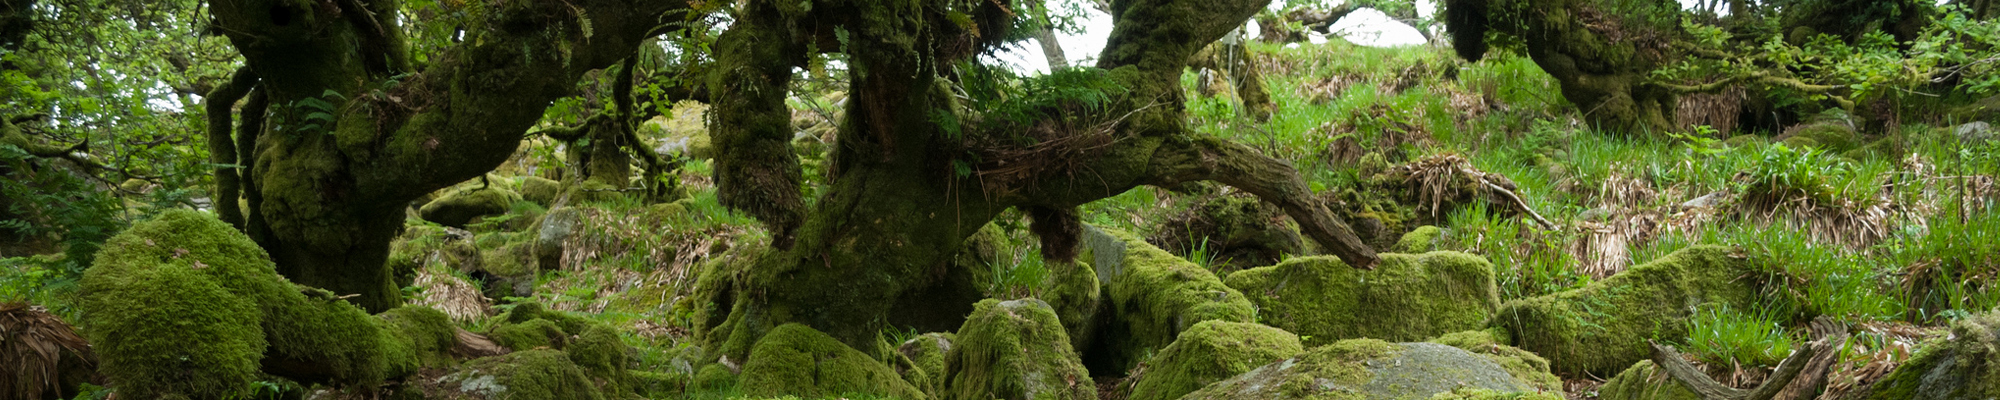 Ancient woodland and veteran trees image